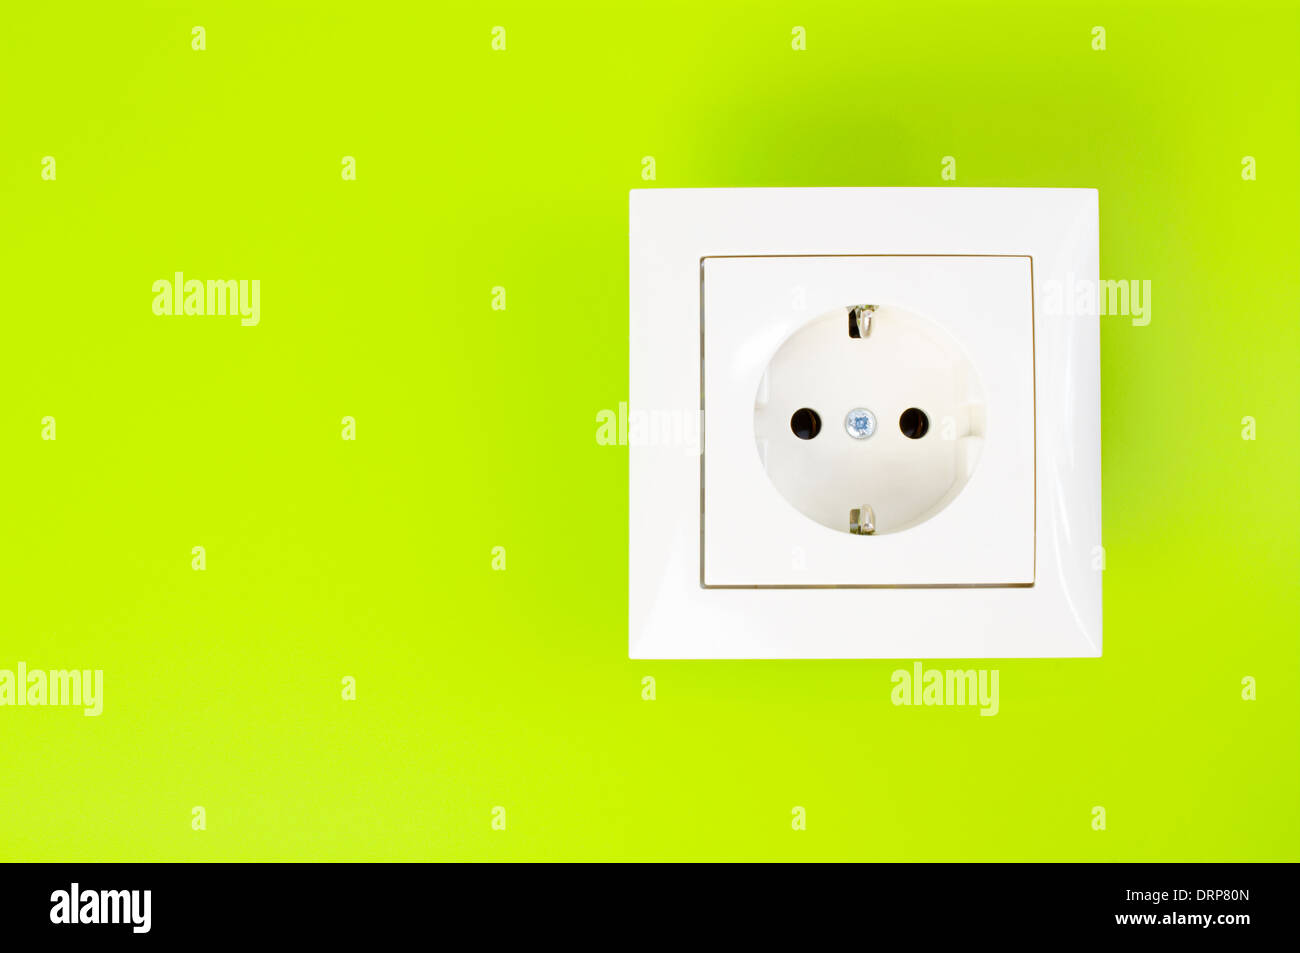 White European power socket on green background Stock Photo